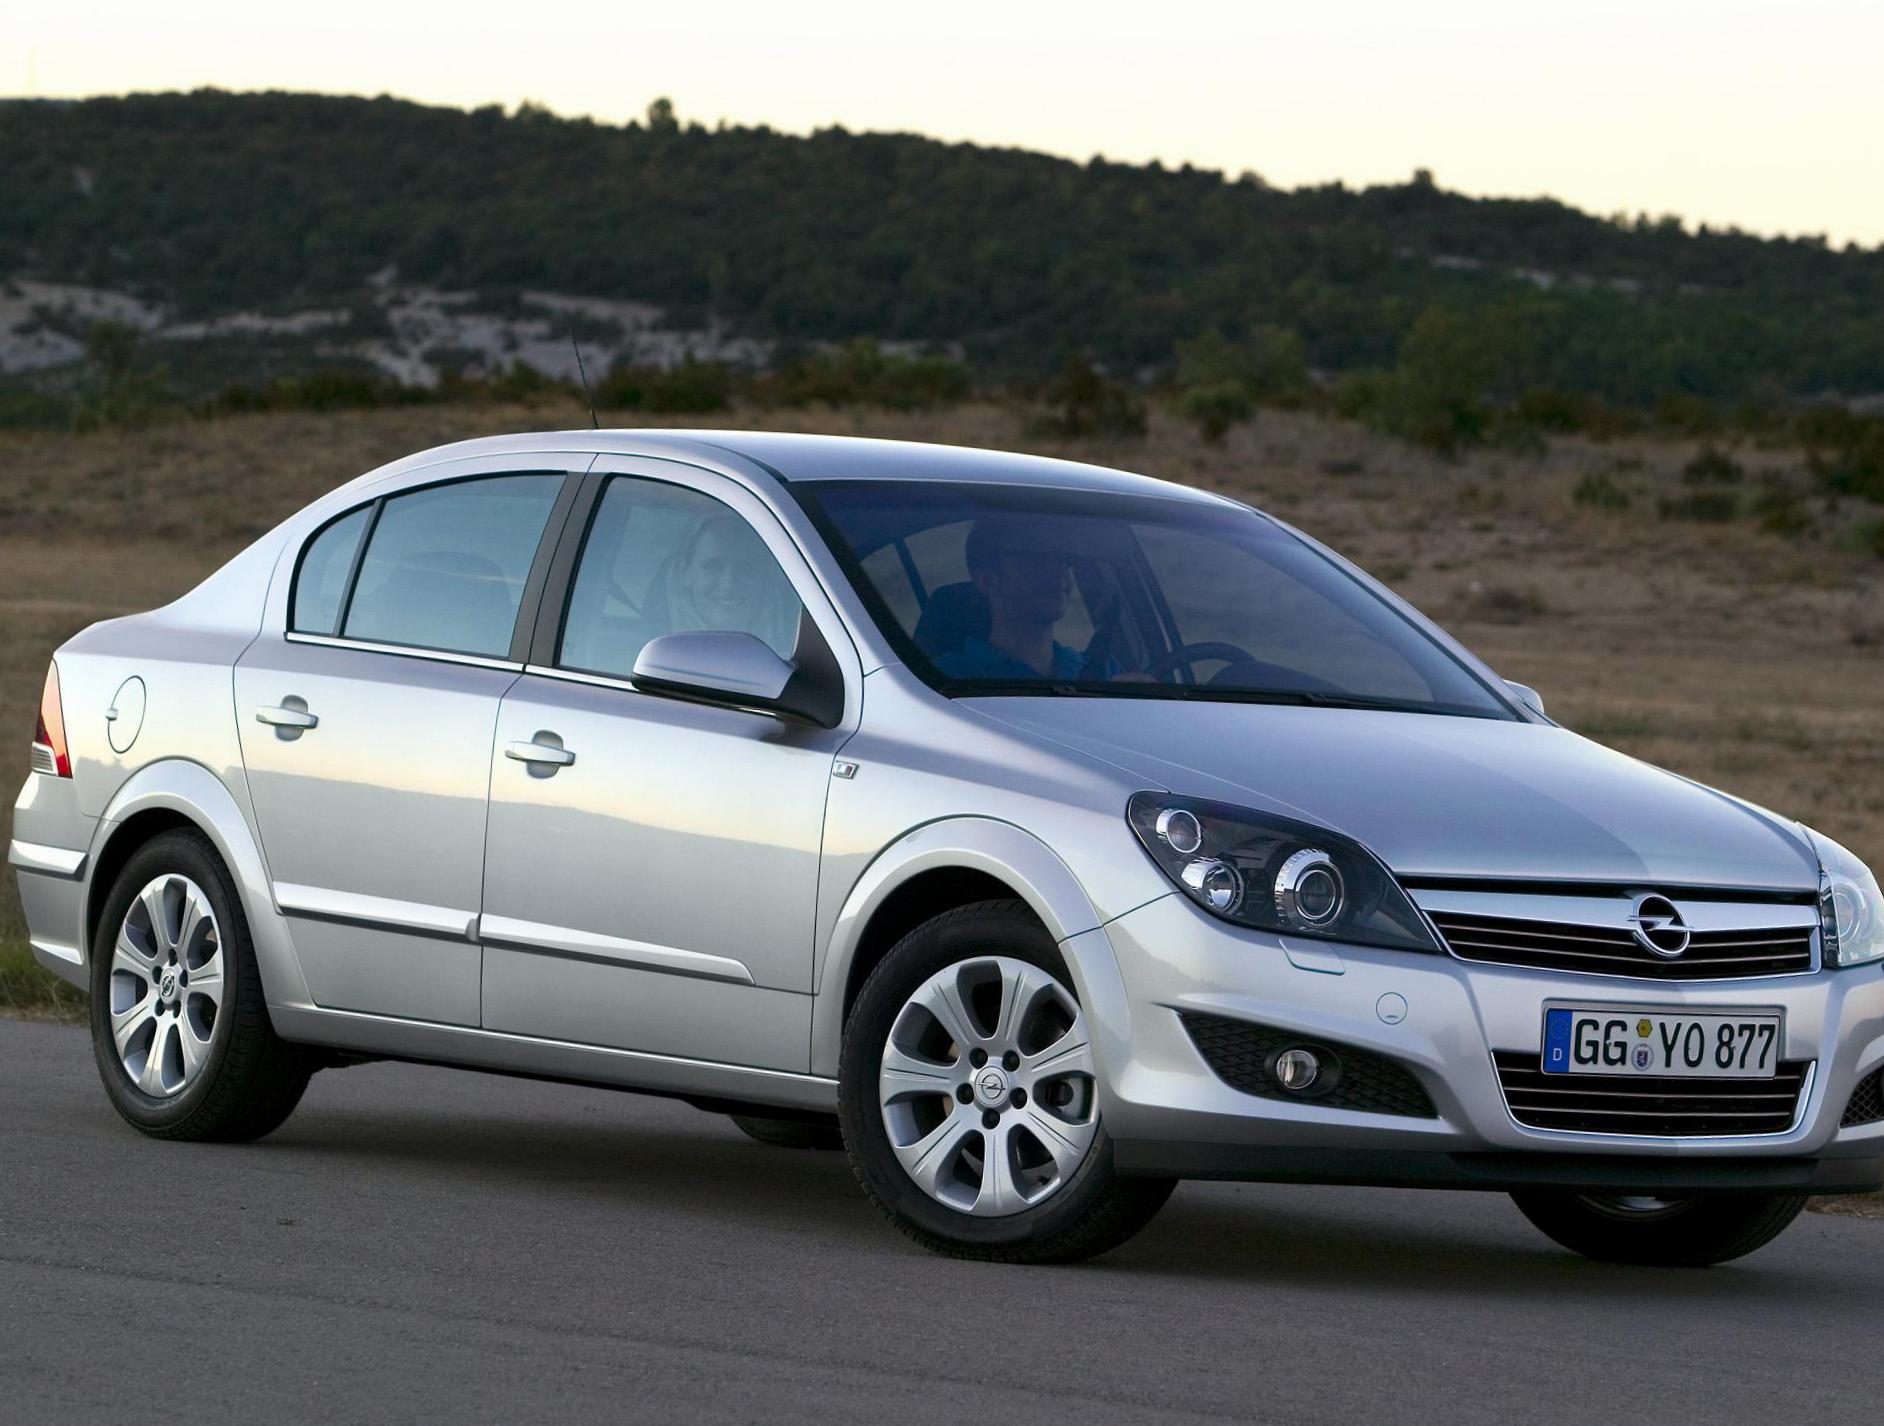 Opel Astra H Sedan model 2007